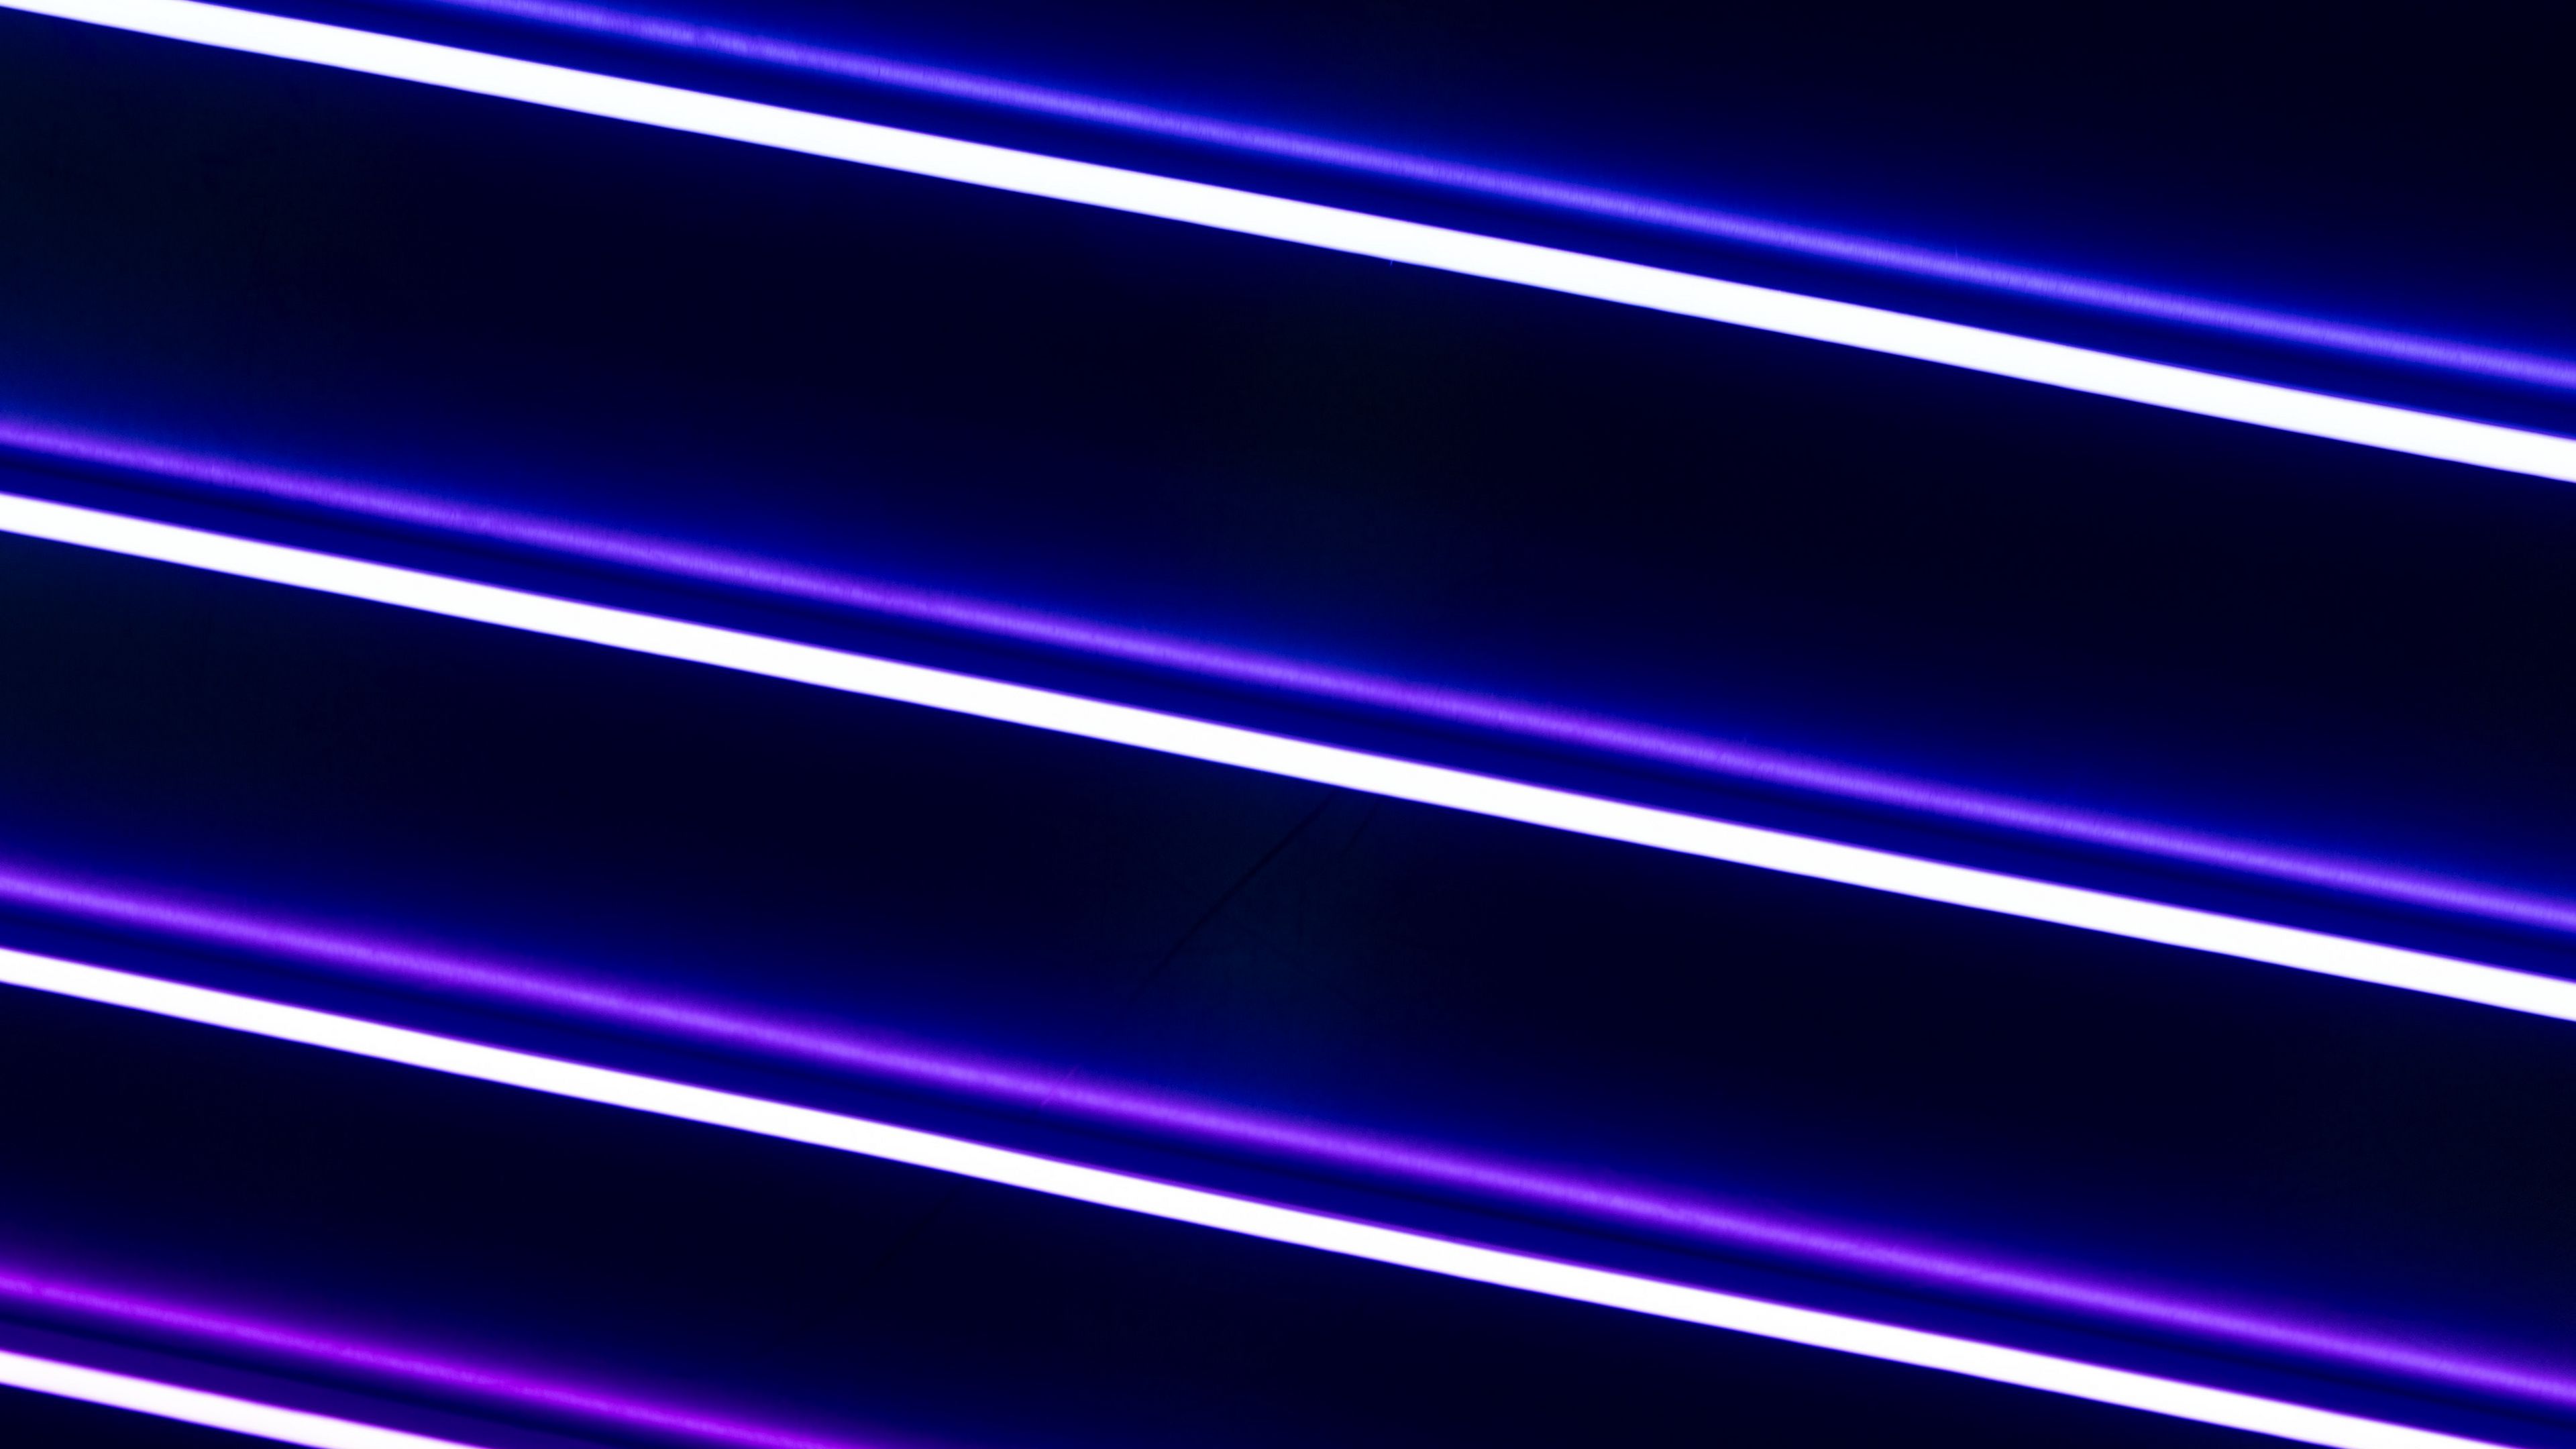 Download wallpaper 3840x2160 neon, lines, stripes, light, blue 4k uhd 16:9  hd background